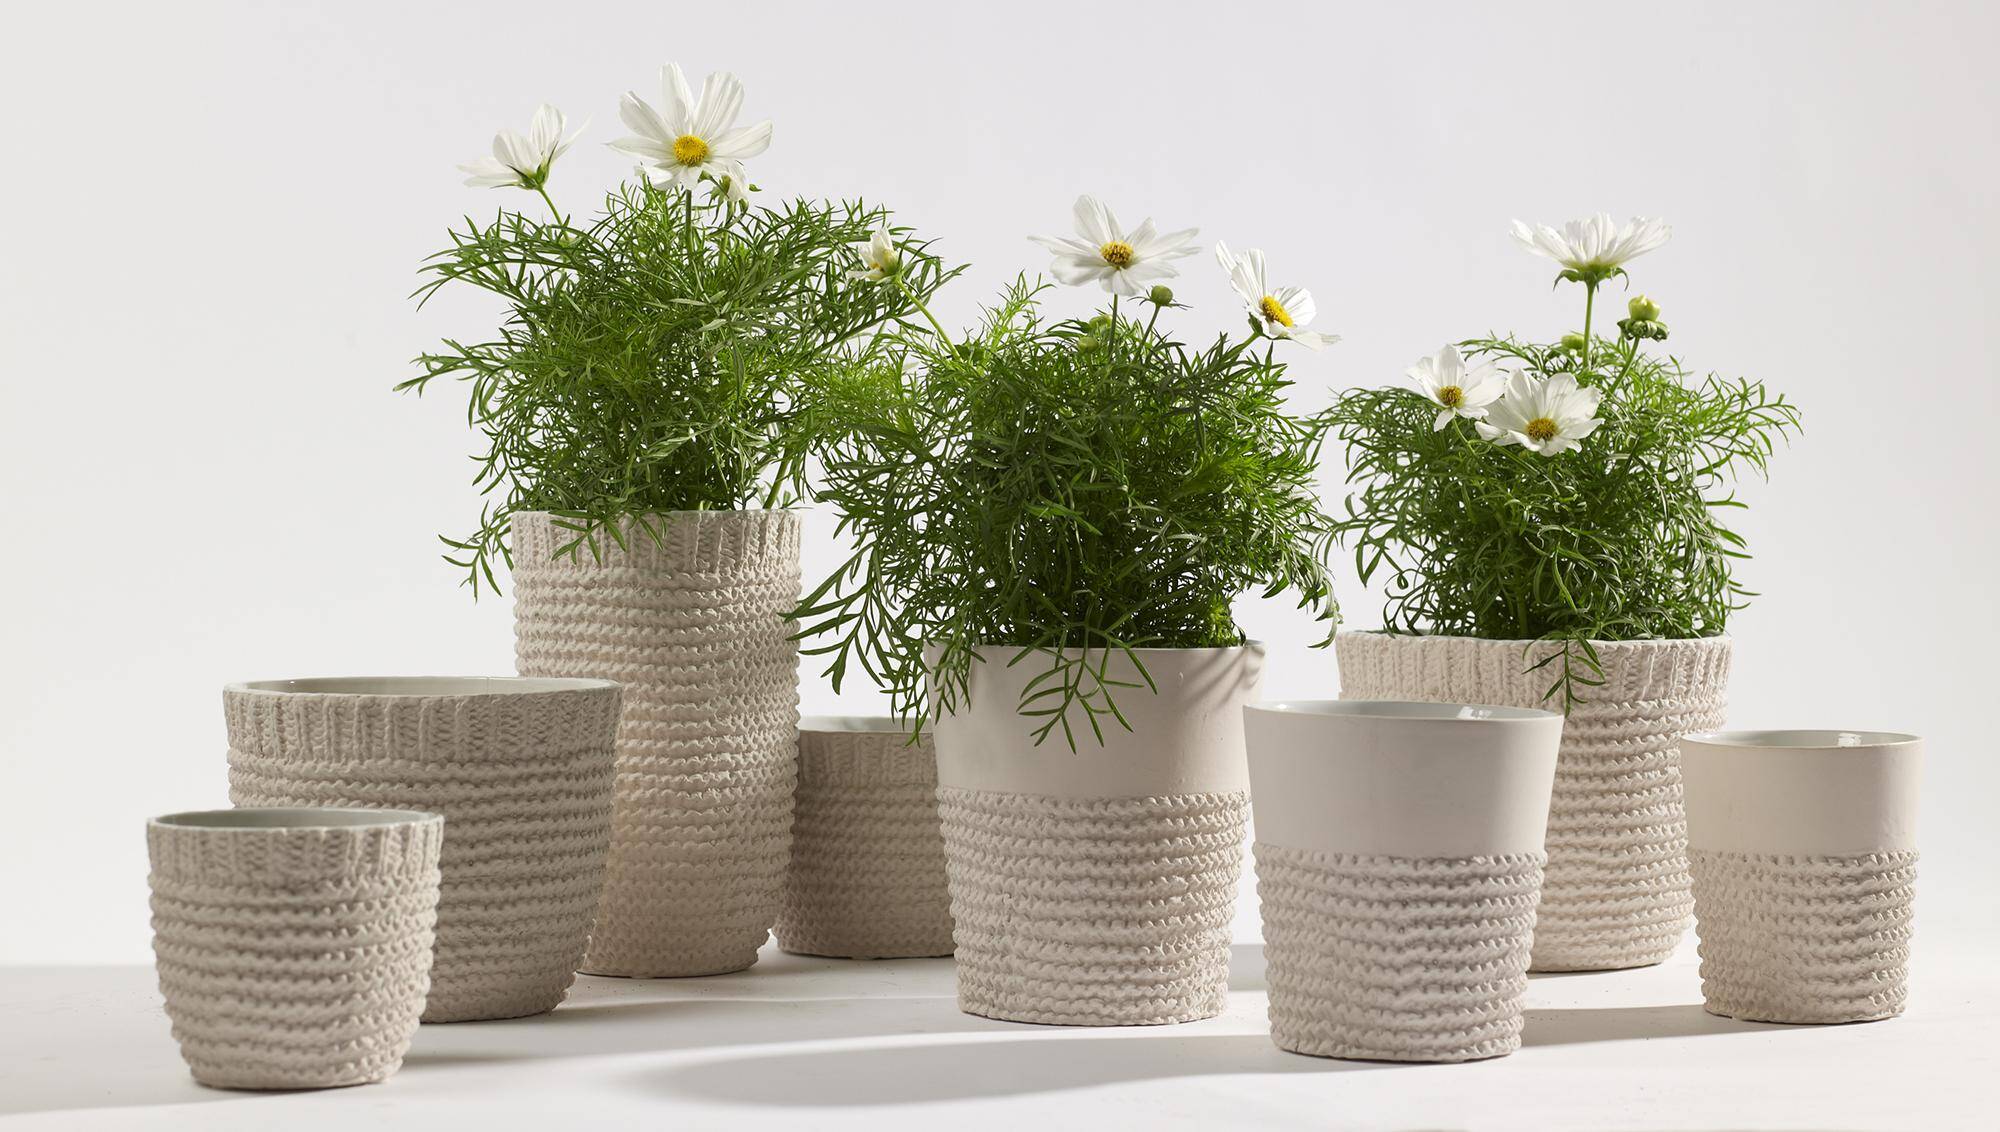 Serax - Flower pots can transform any garden or interior